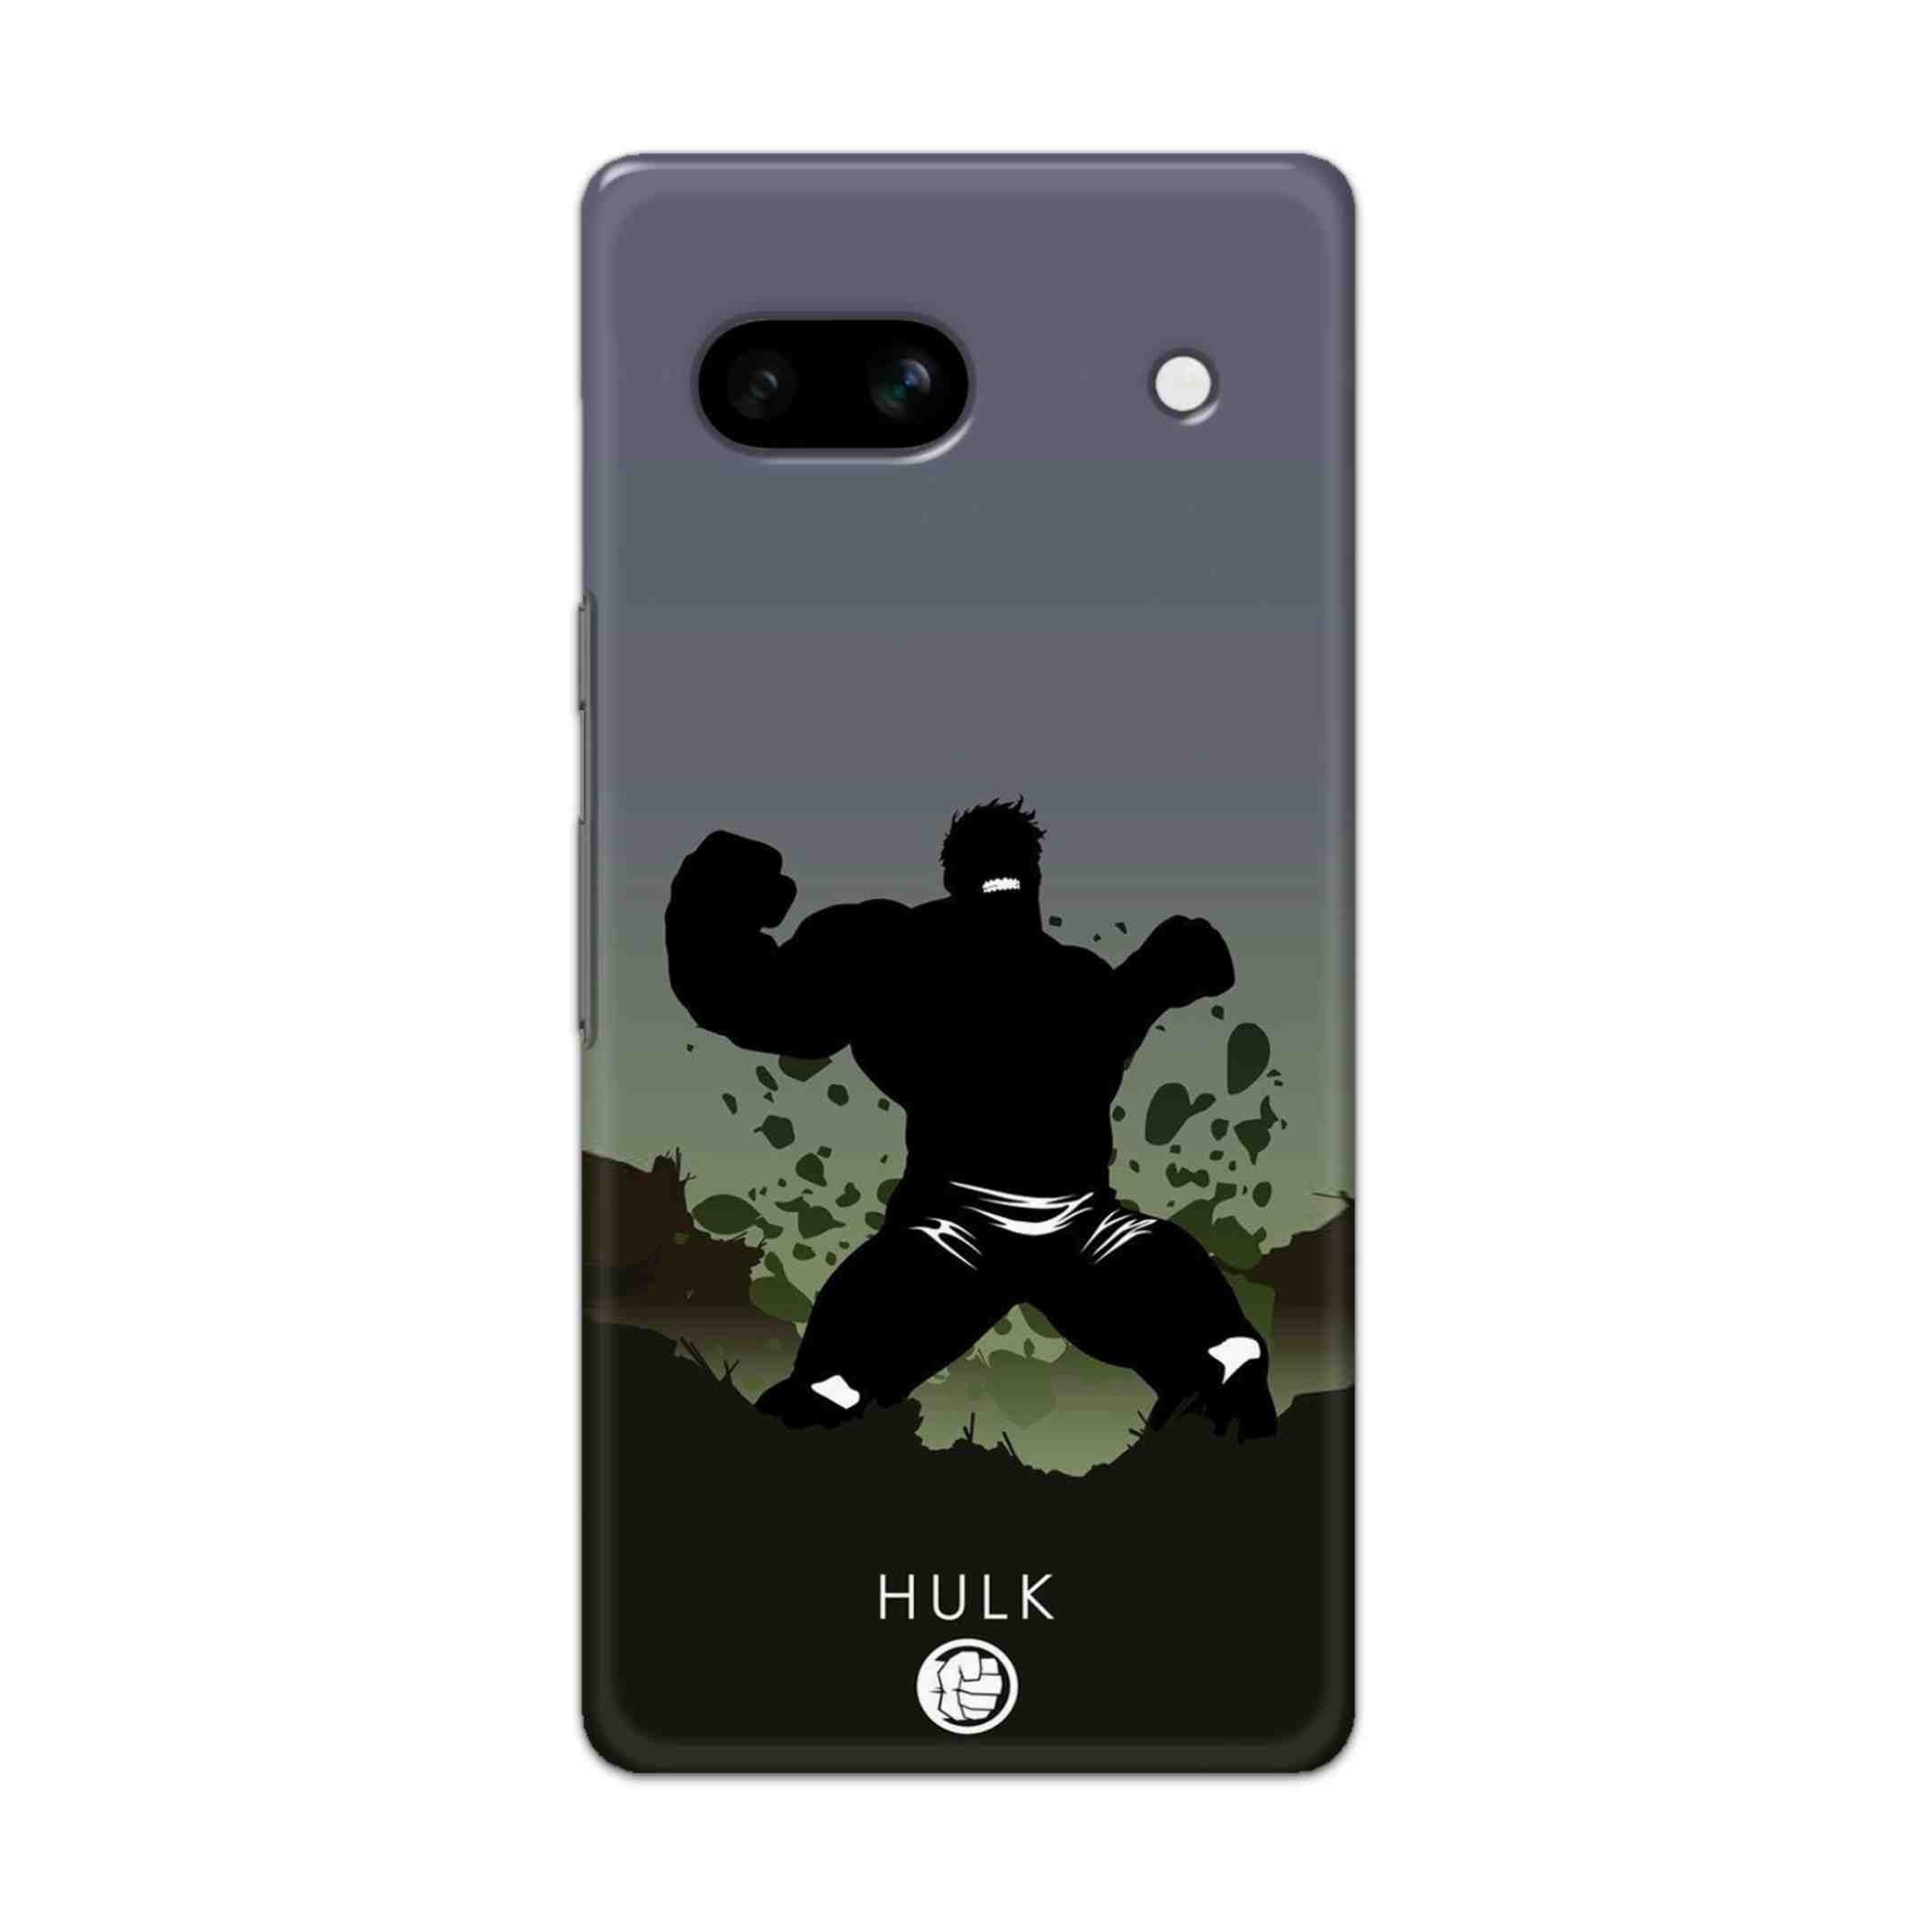 Buy Hulk Drax Hard Back Mobile Phone Case/Cover For Google Pixel 7A Online